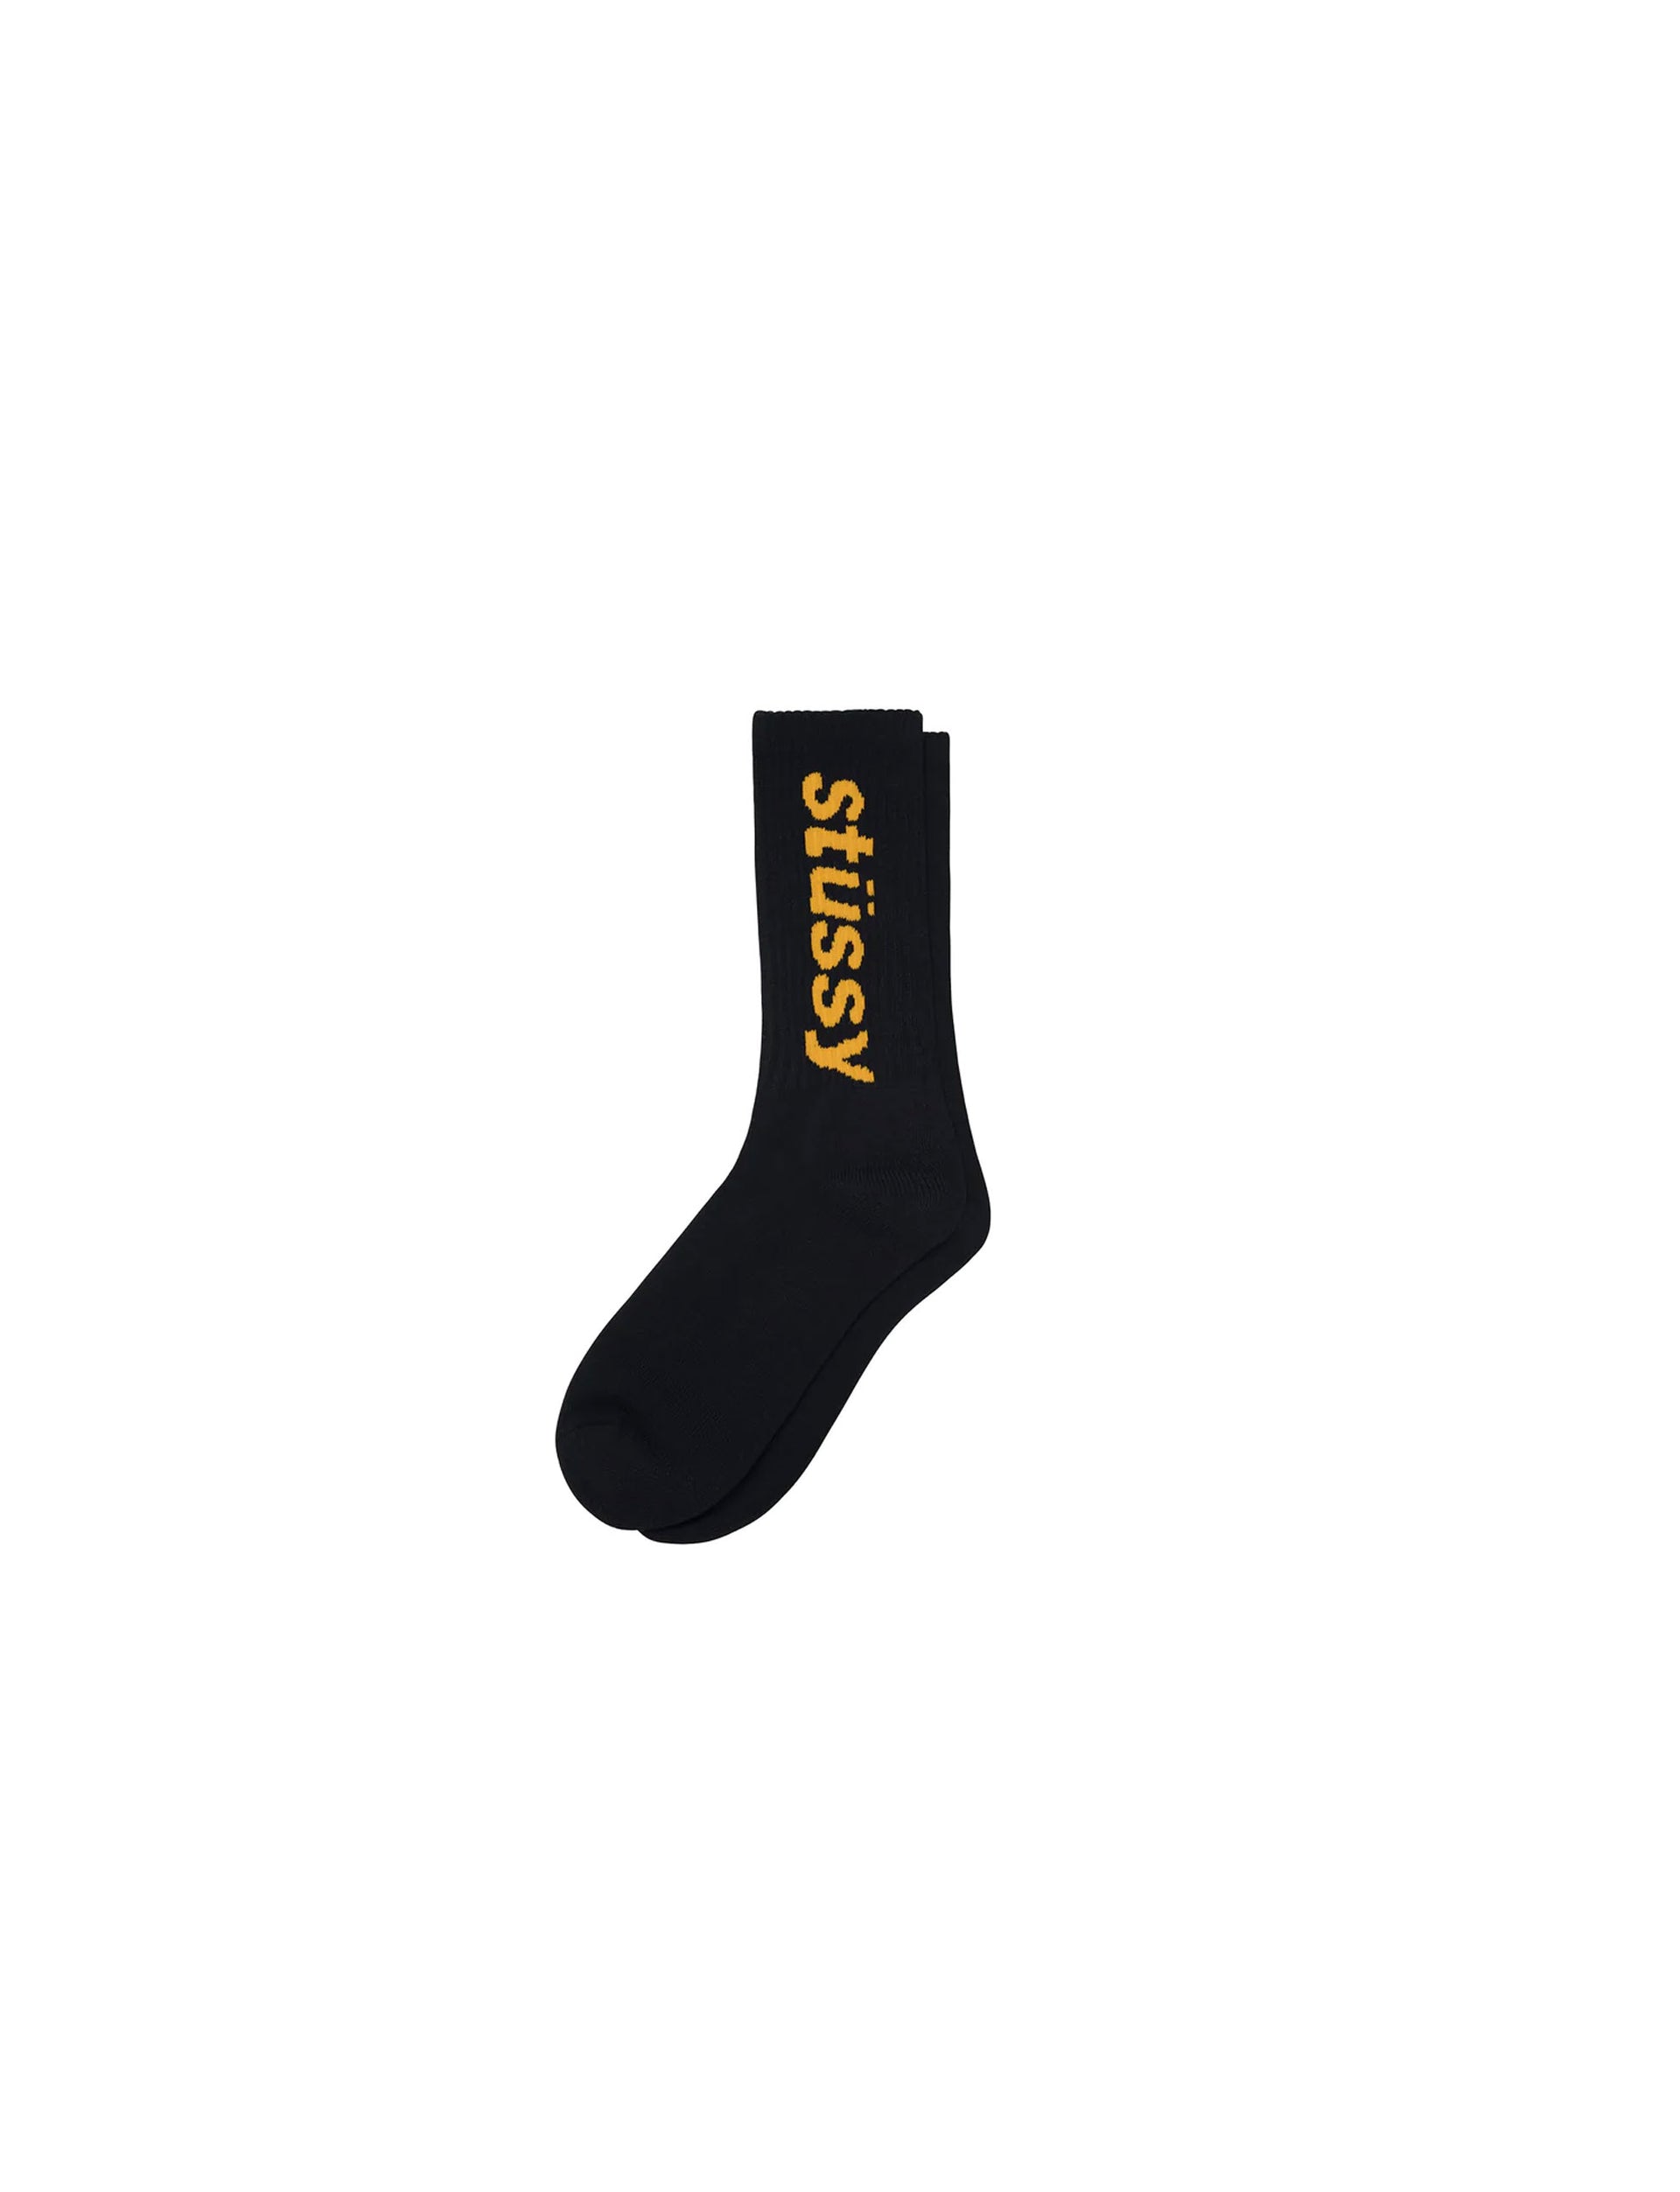 STÜSSY Helvetica Crew Socks BLACK/YELLOW